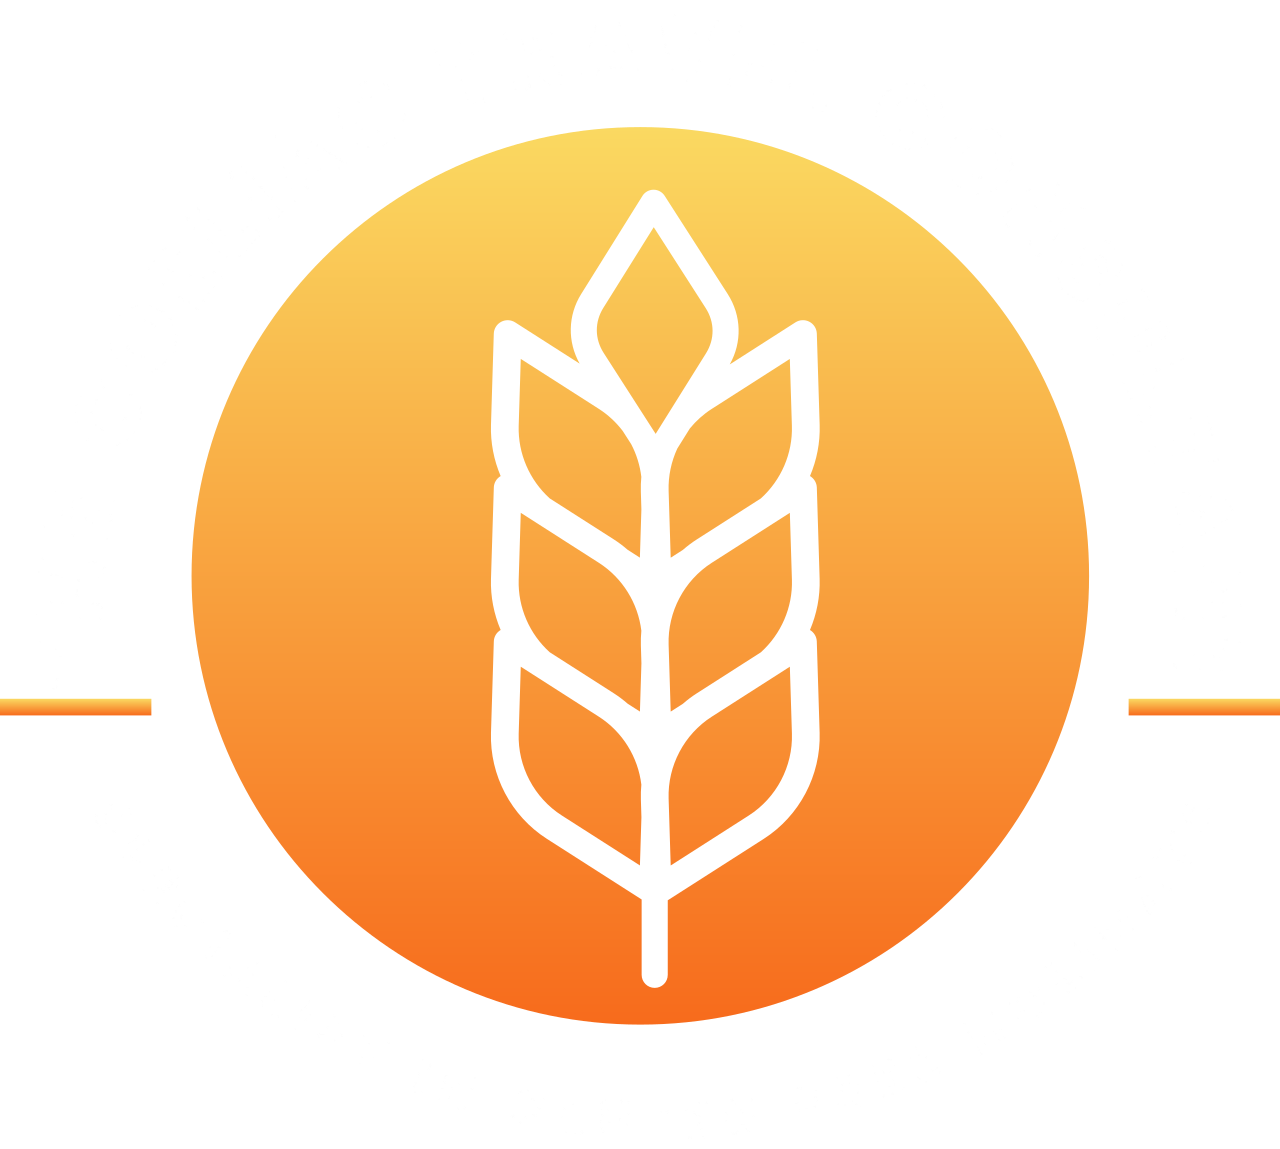 The Coeliac Travel Consultant's logo